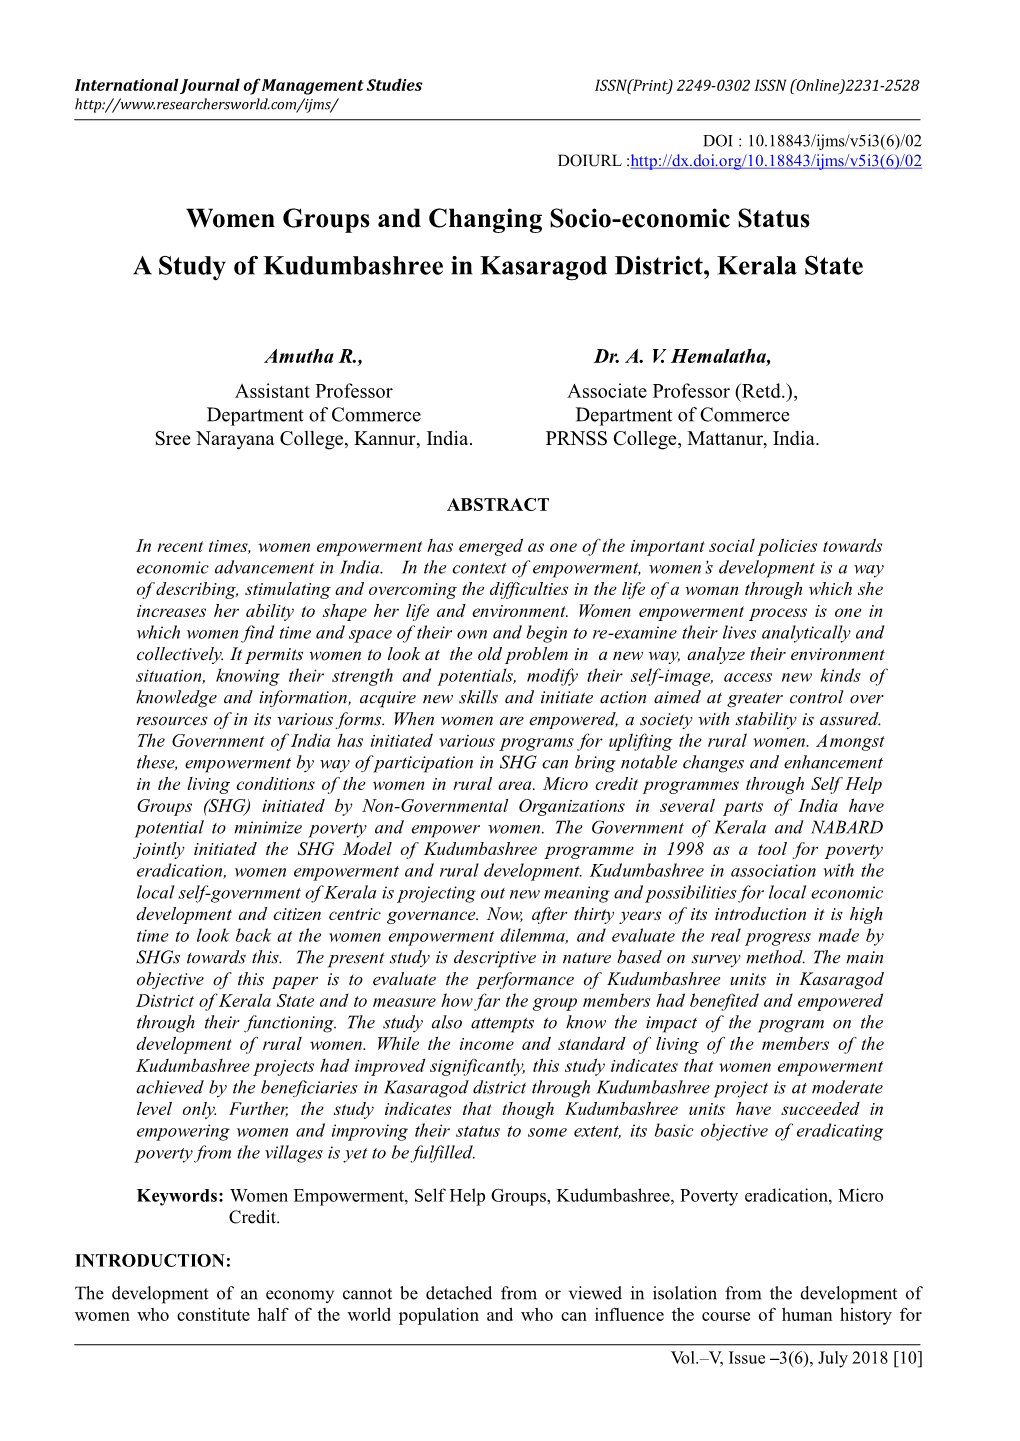 Women Groups and Changing Socio-Economic Status a Study of Kudumbashree in Kasaragod District, Kerala State